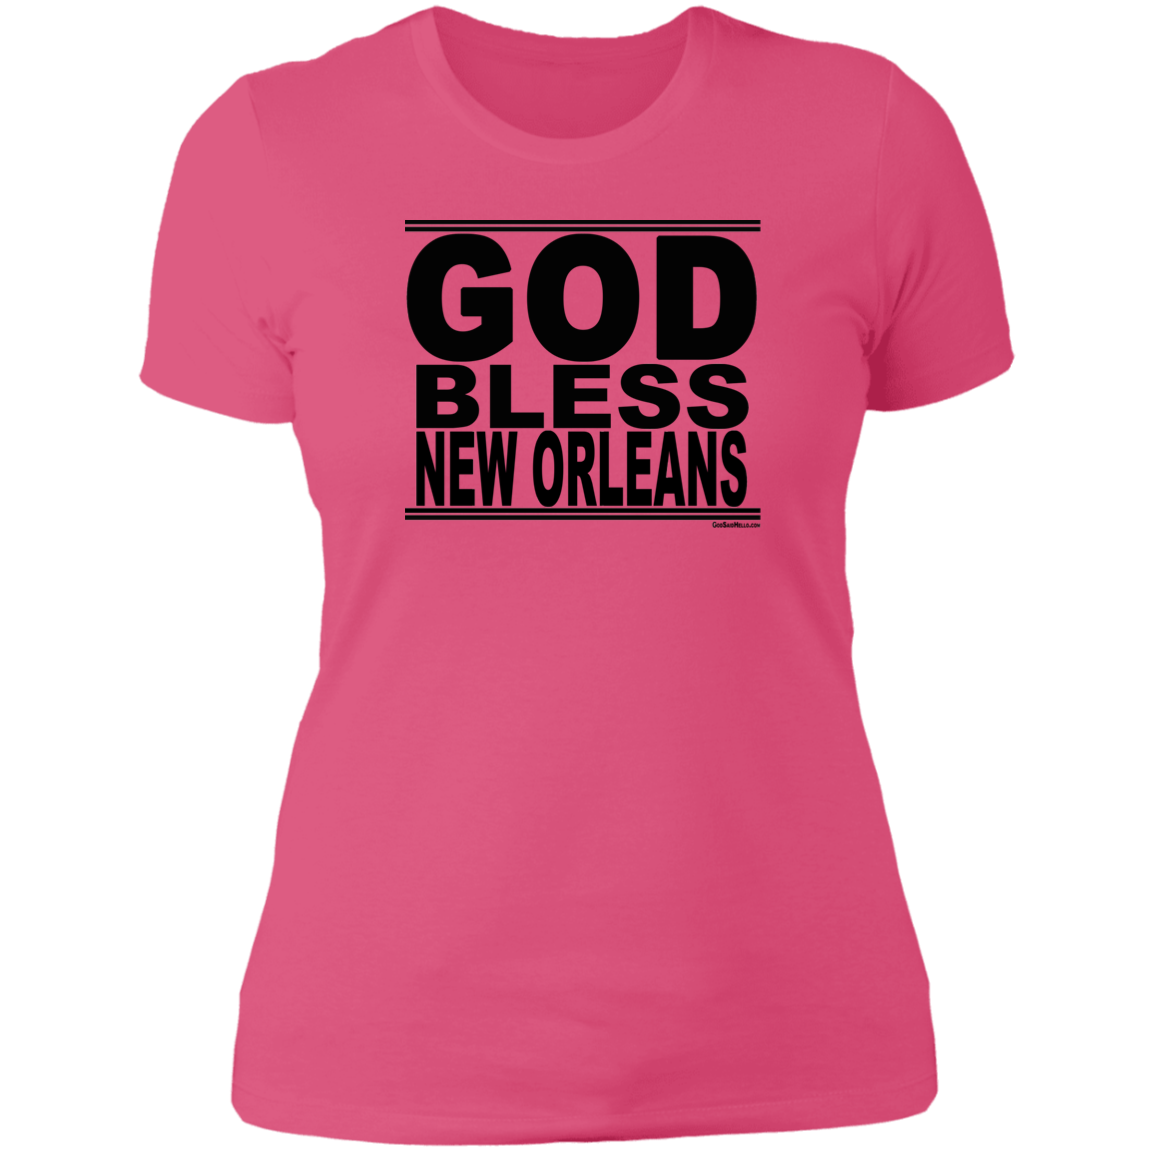 #GodBlessNewOrleans - Women's Shortsleeve Tee